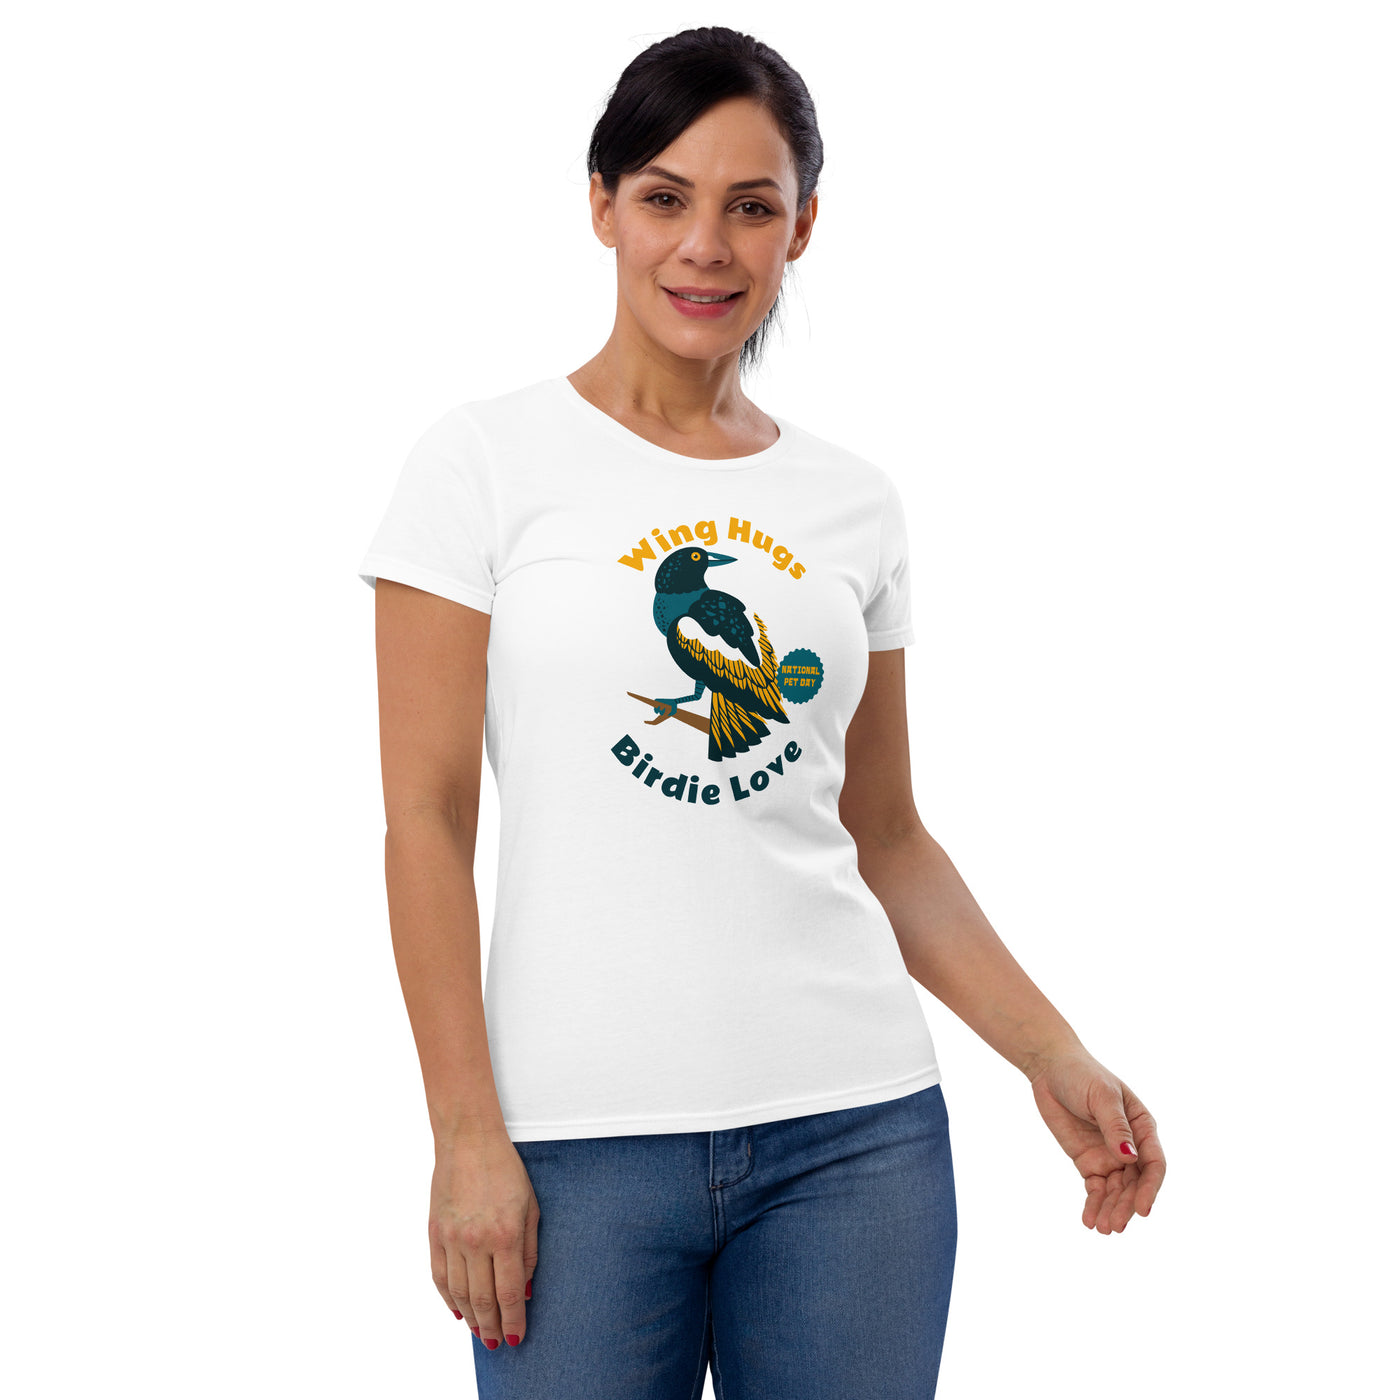 Birdie Love Women's T-Shirt